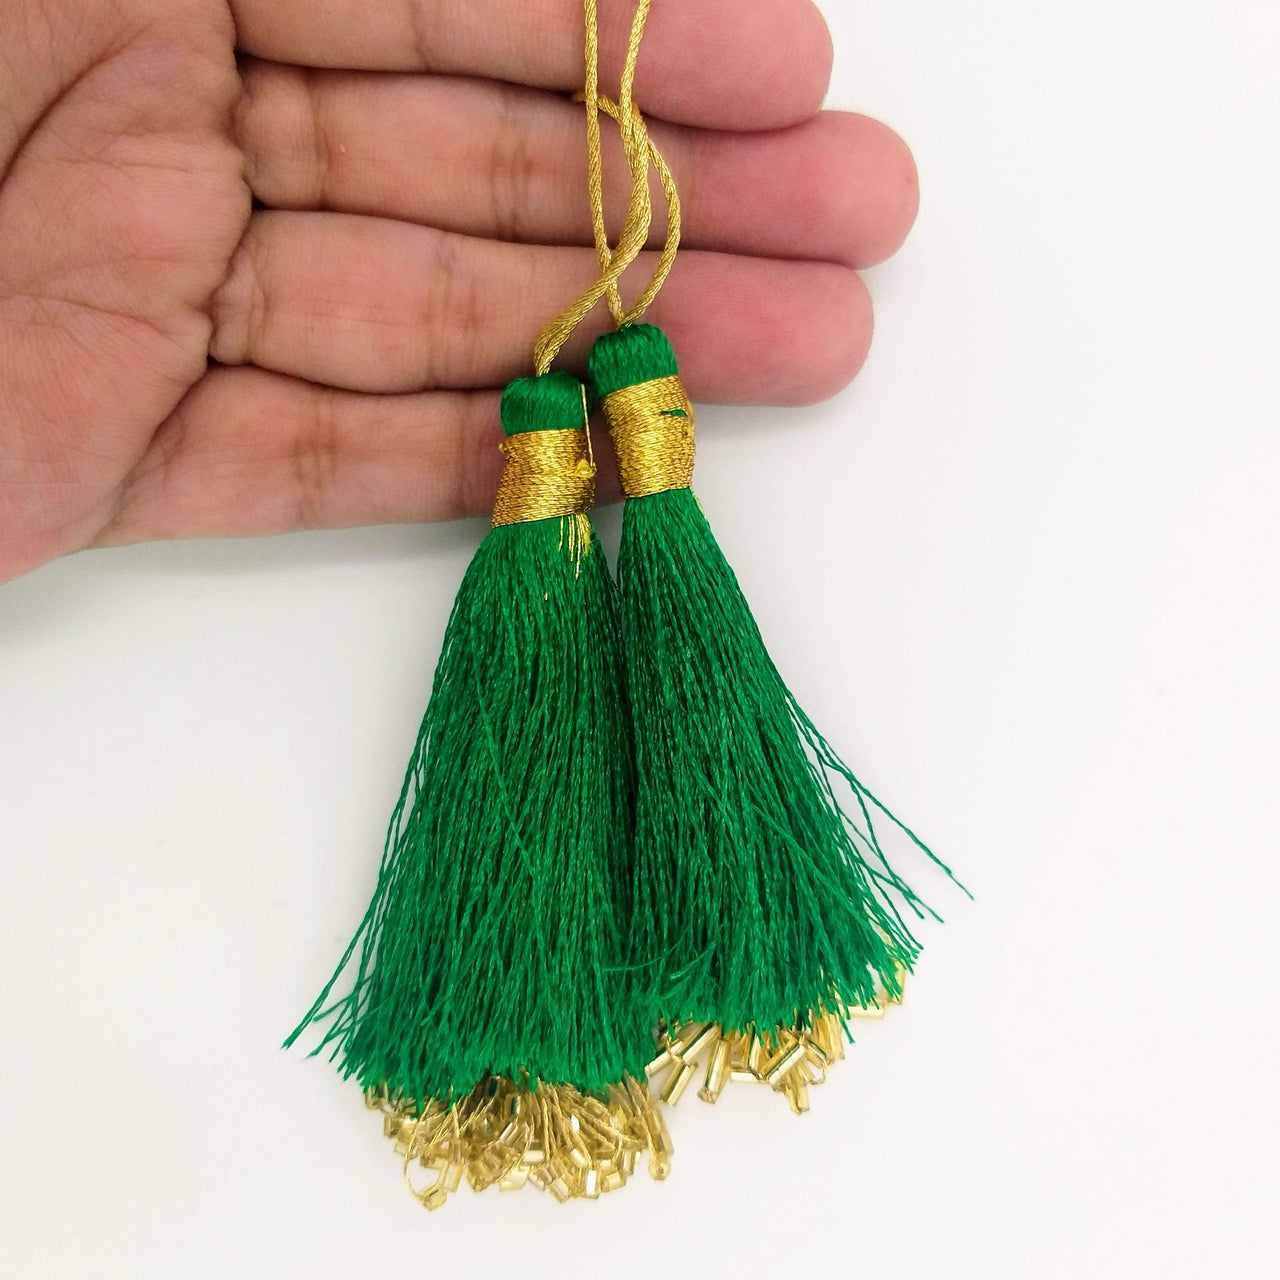 Green Tassels With Gold Beads, Beaded Thread Tassel Charms, Silky Tassels